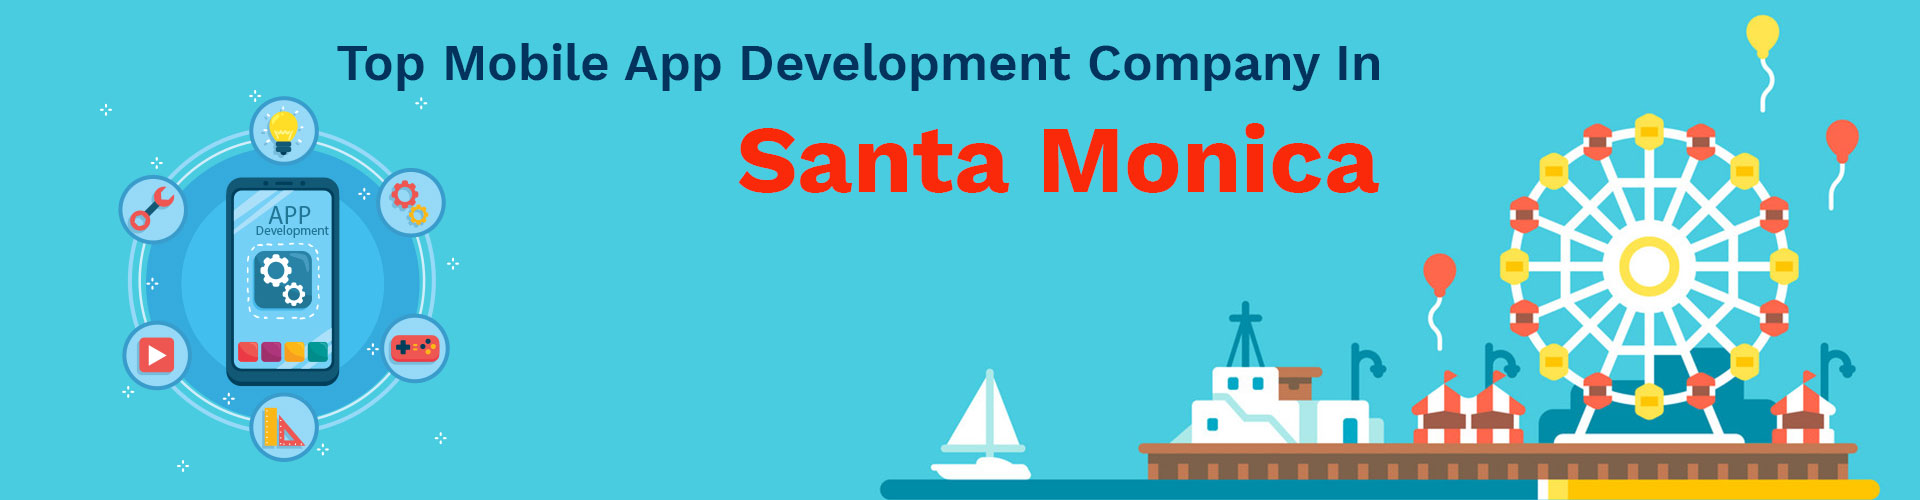 mobile app development company santa monica